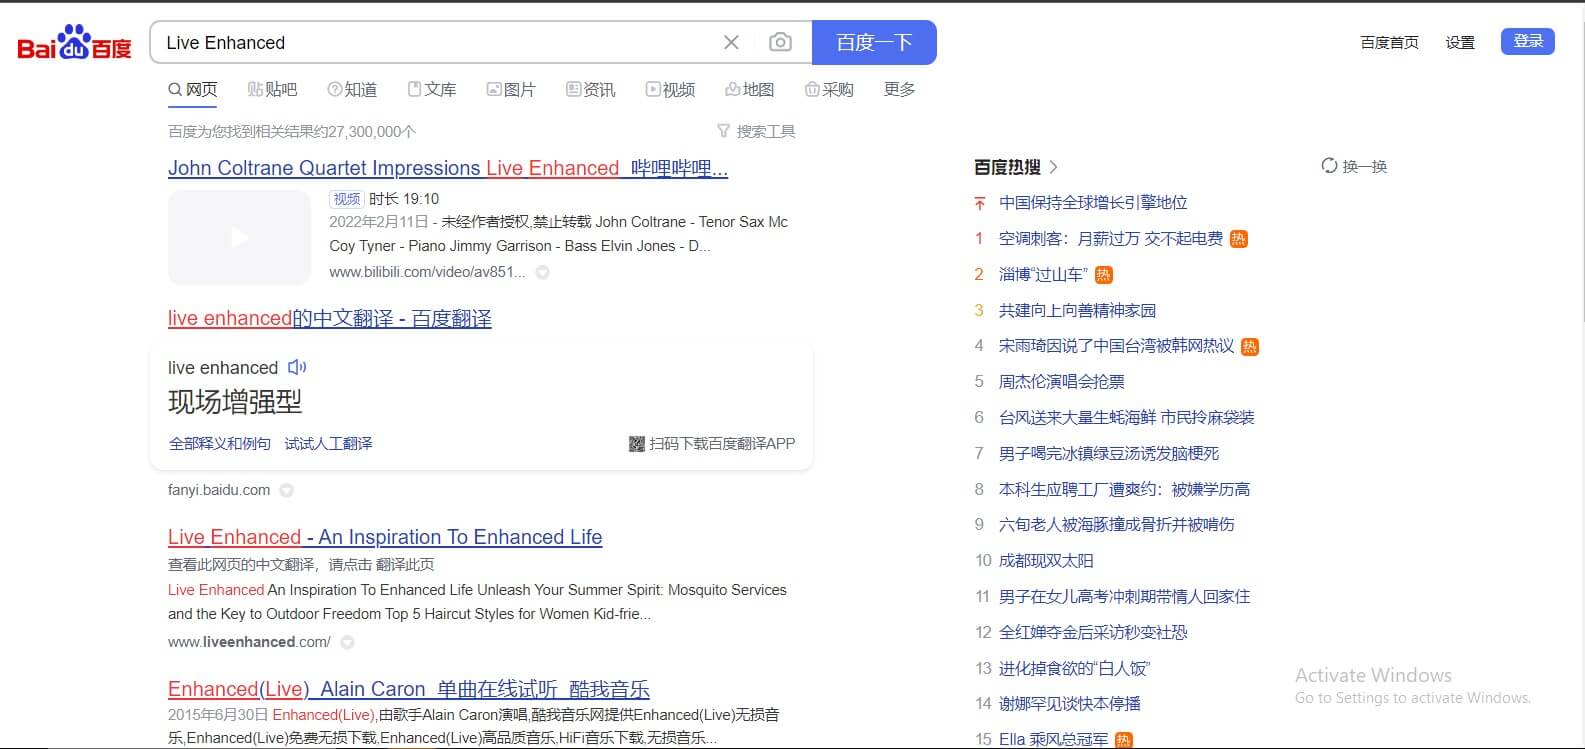 Baidu search engine Search query "Live Enhanced"